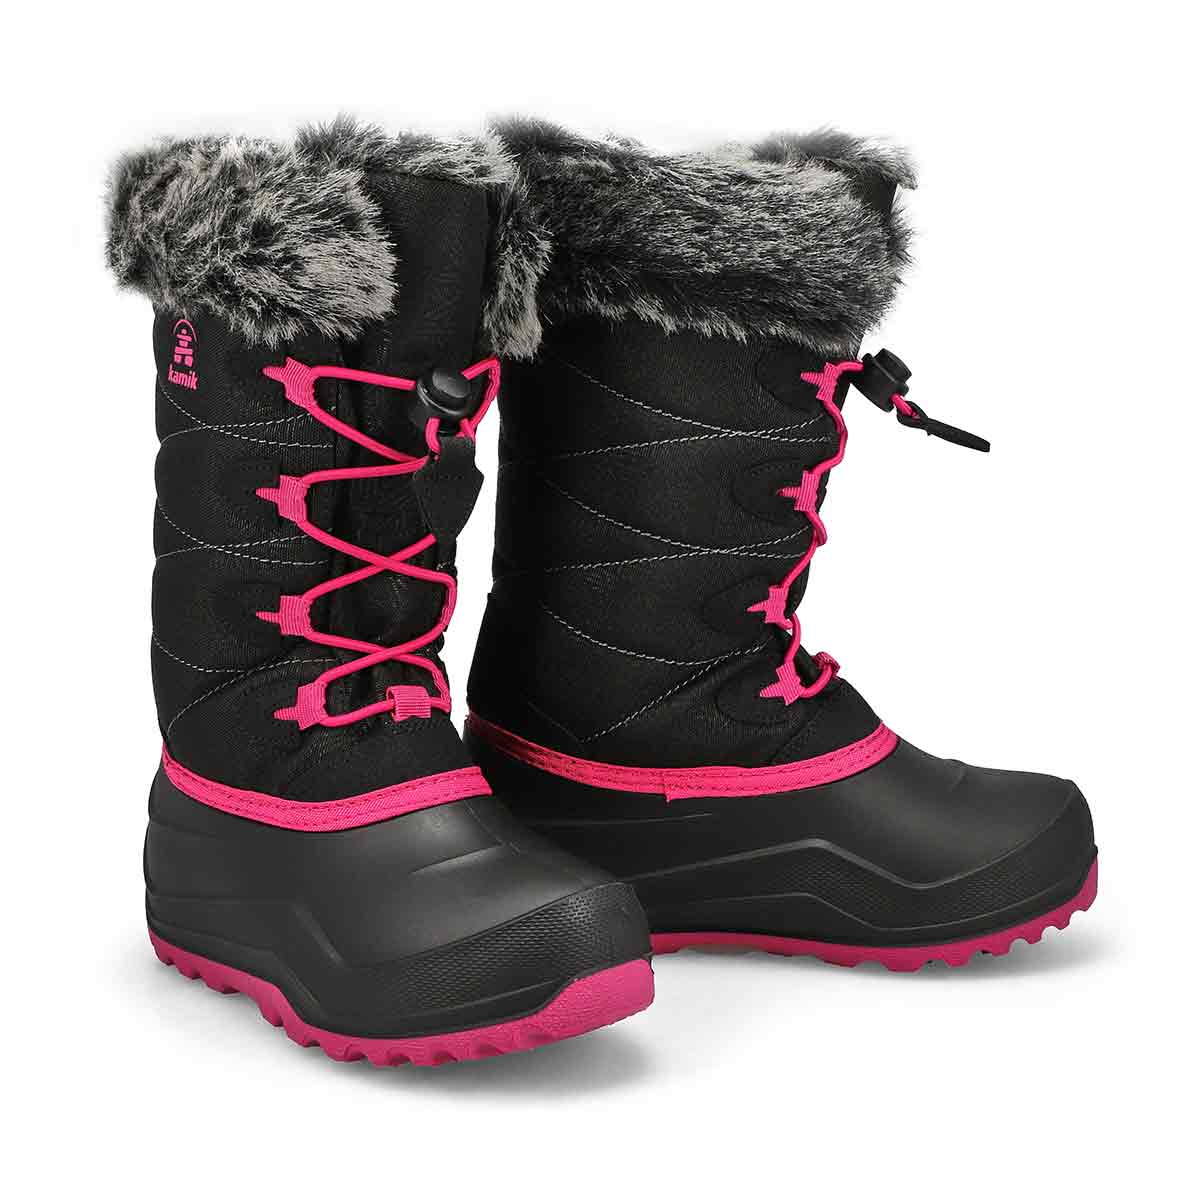 Kamik Girls' Snowangel Winter Boot - Charcoal | SoftMoc.com